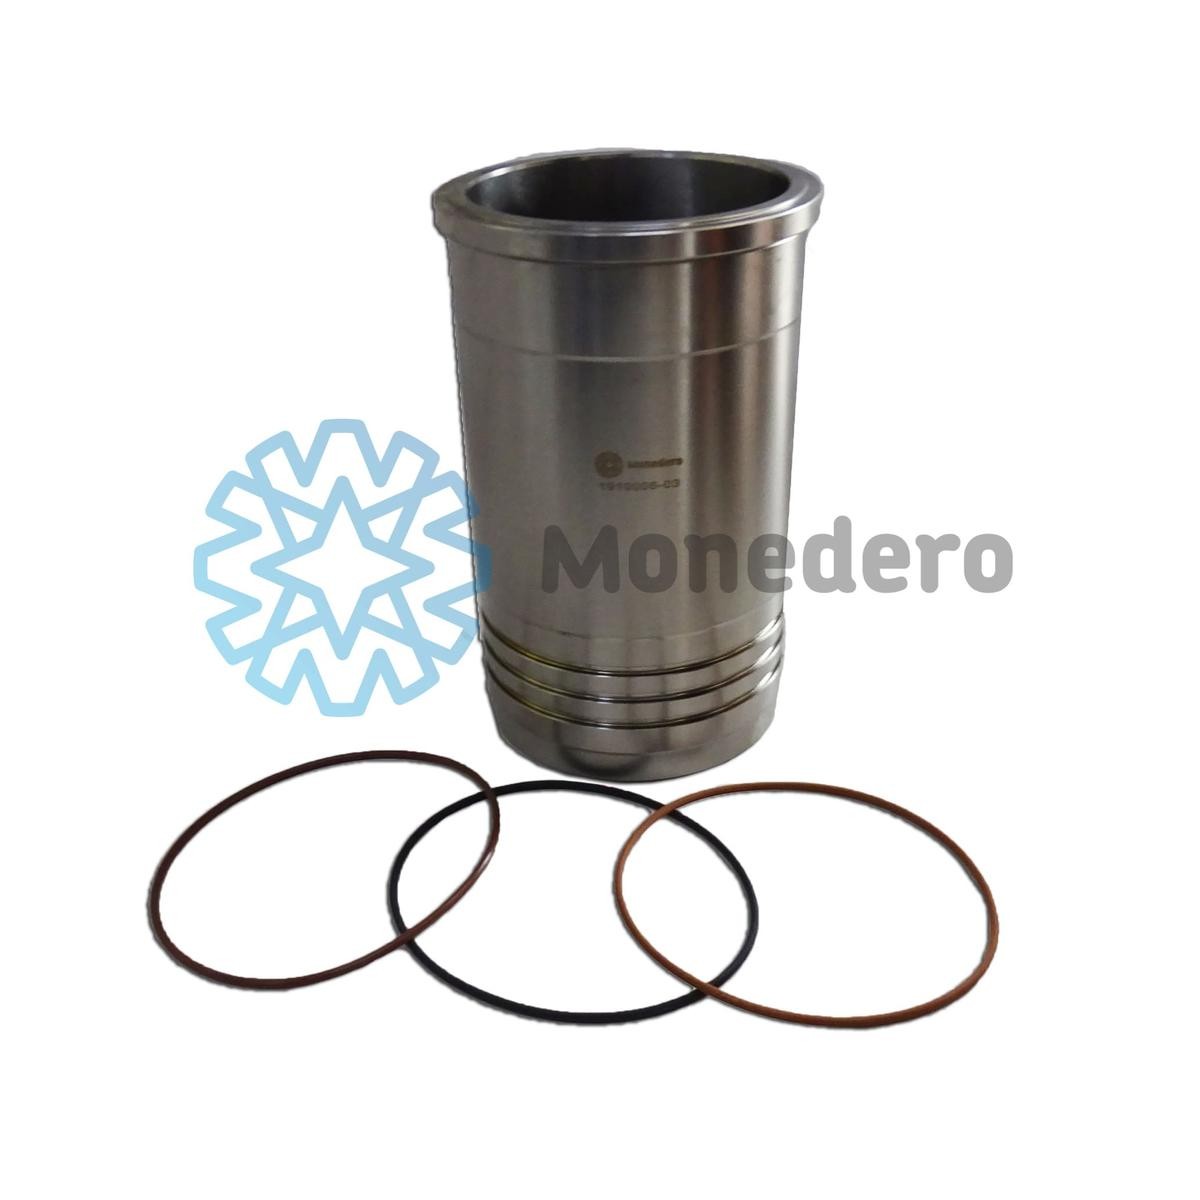 MONEDERO Cylinder Sleeve 30011300001 buy